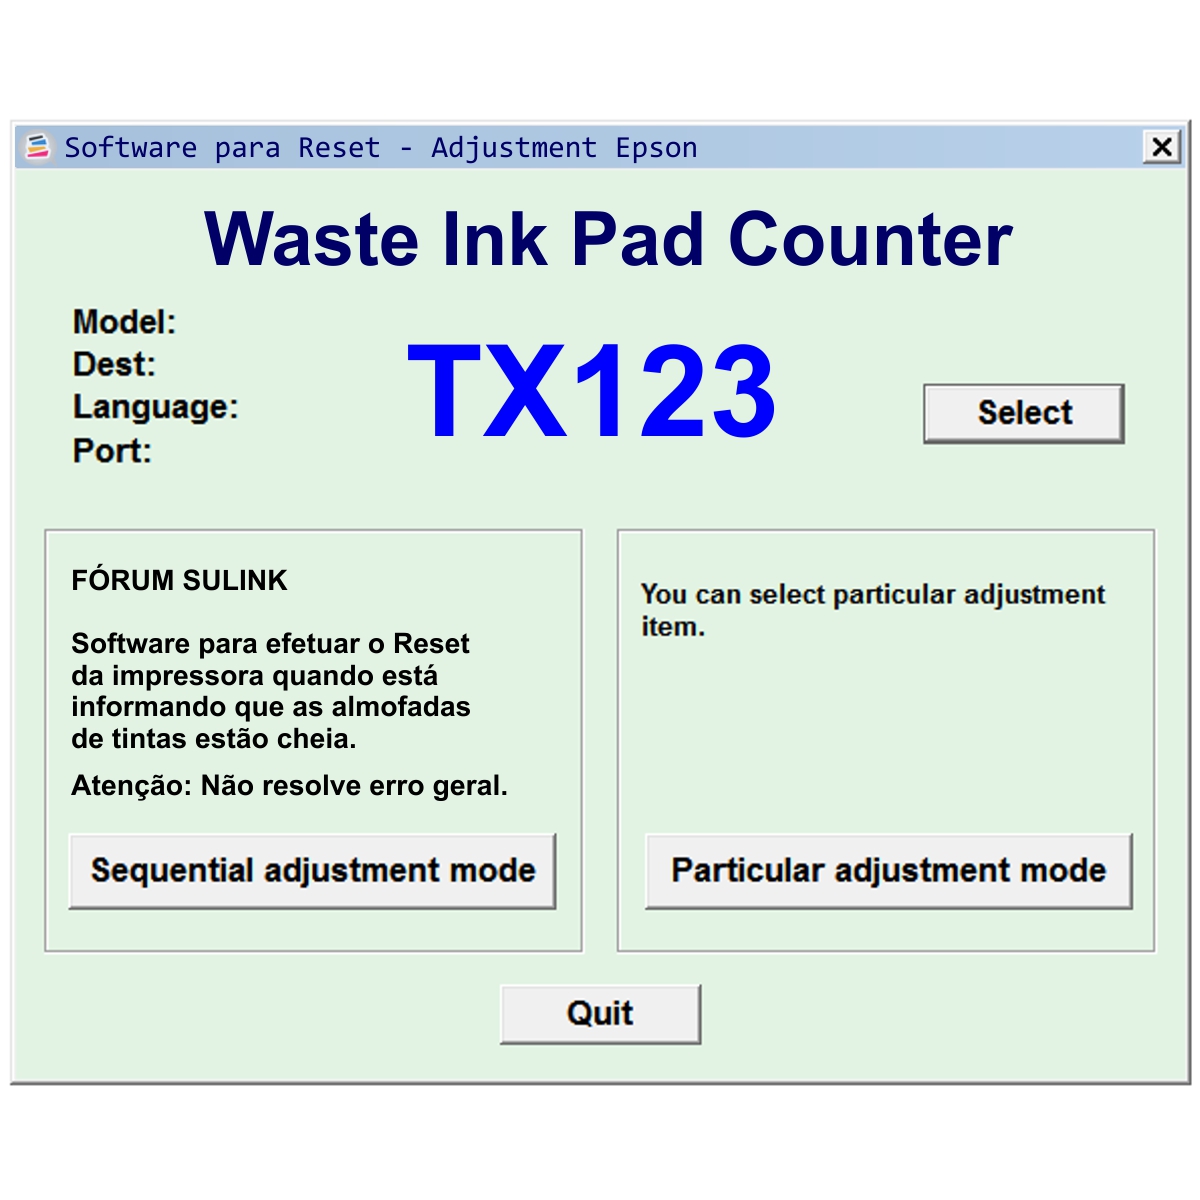 Epson TX123 | Software para Ajustes e Reset das Almofadas